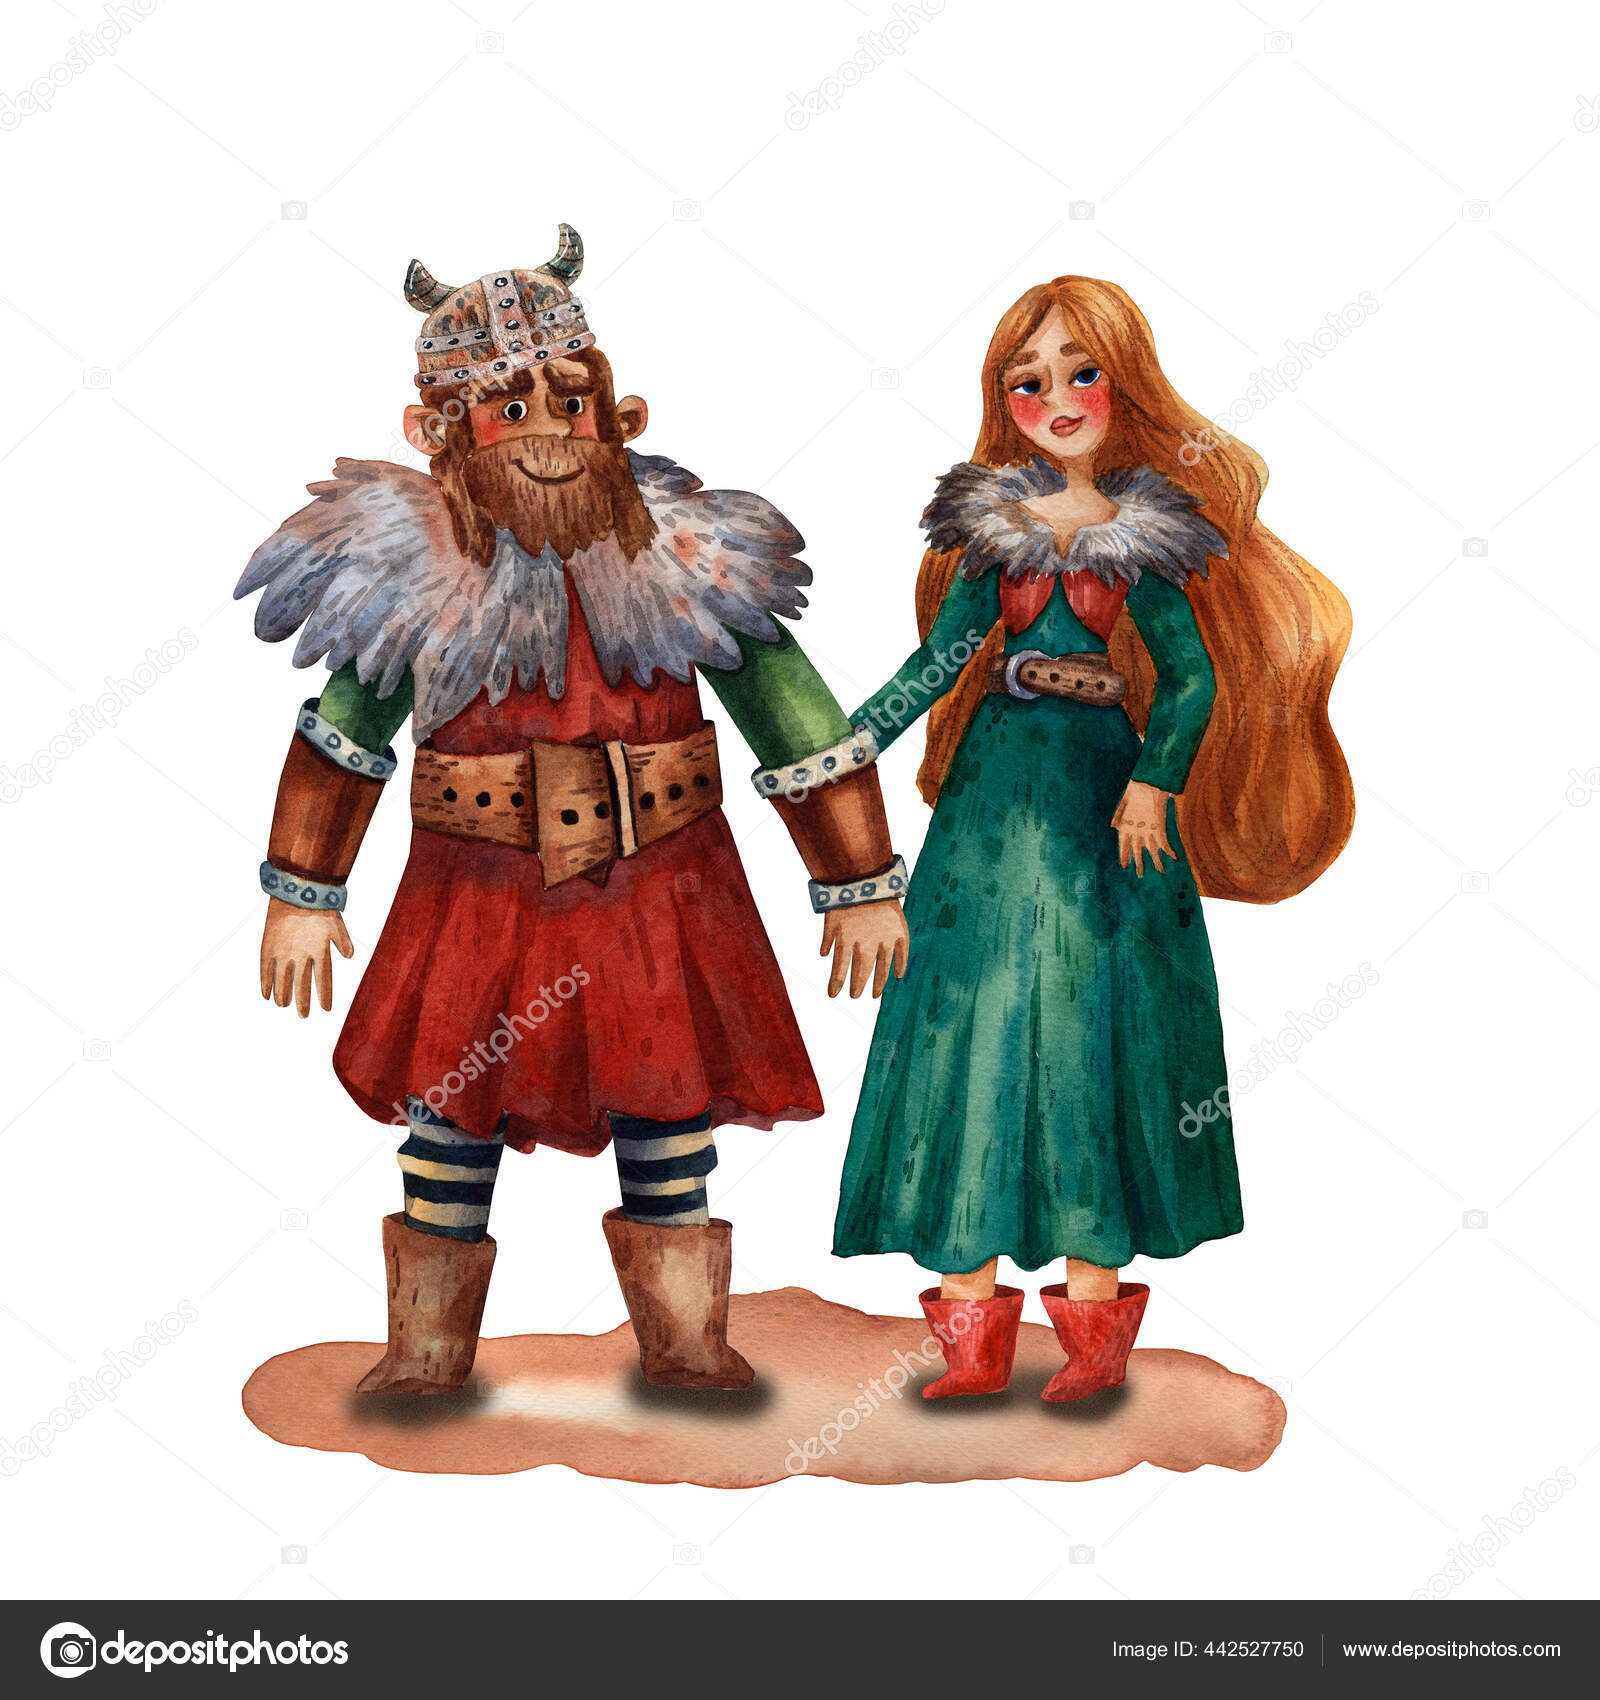 Cartoon illustration of viking family